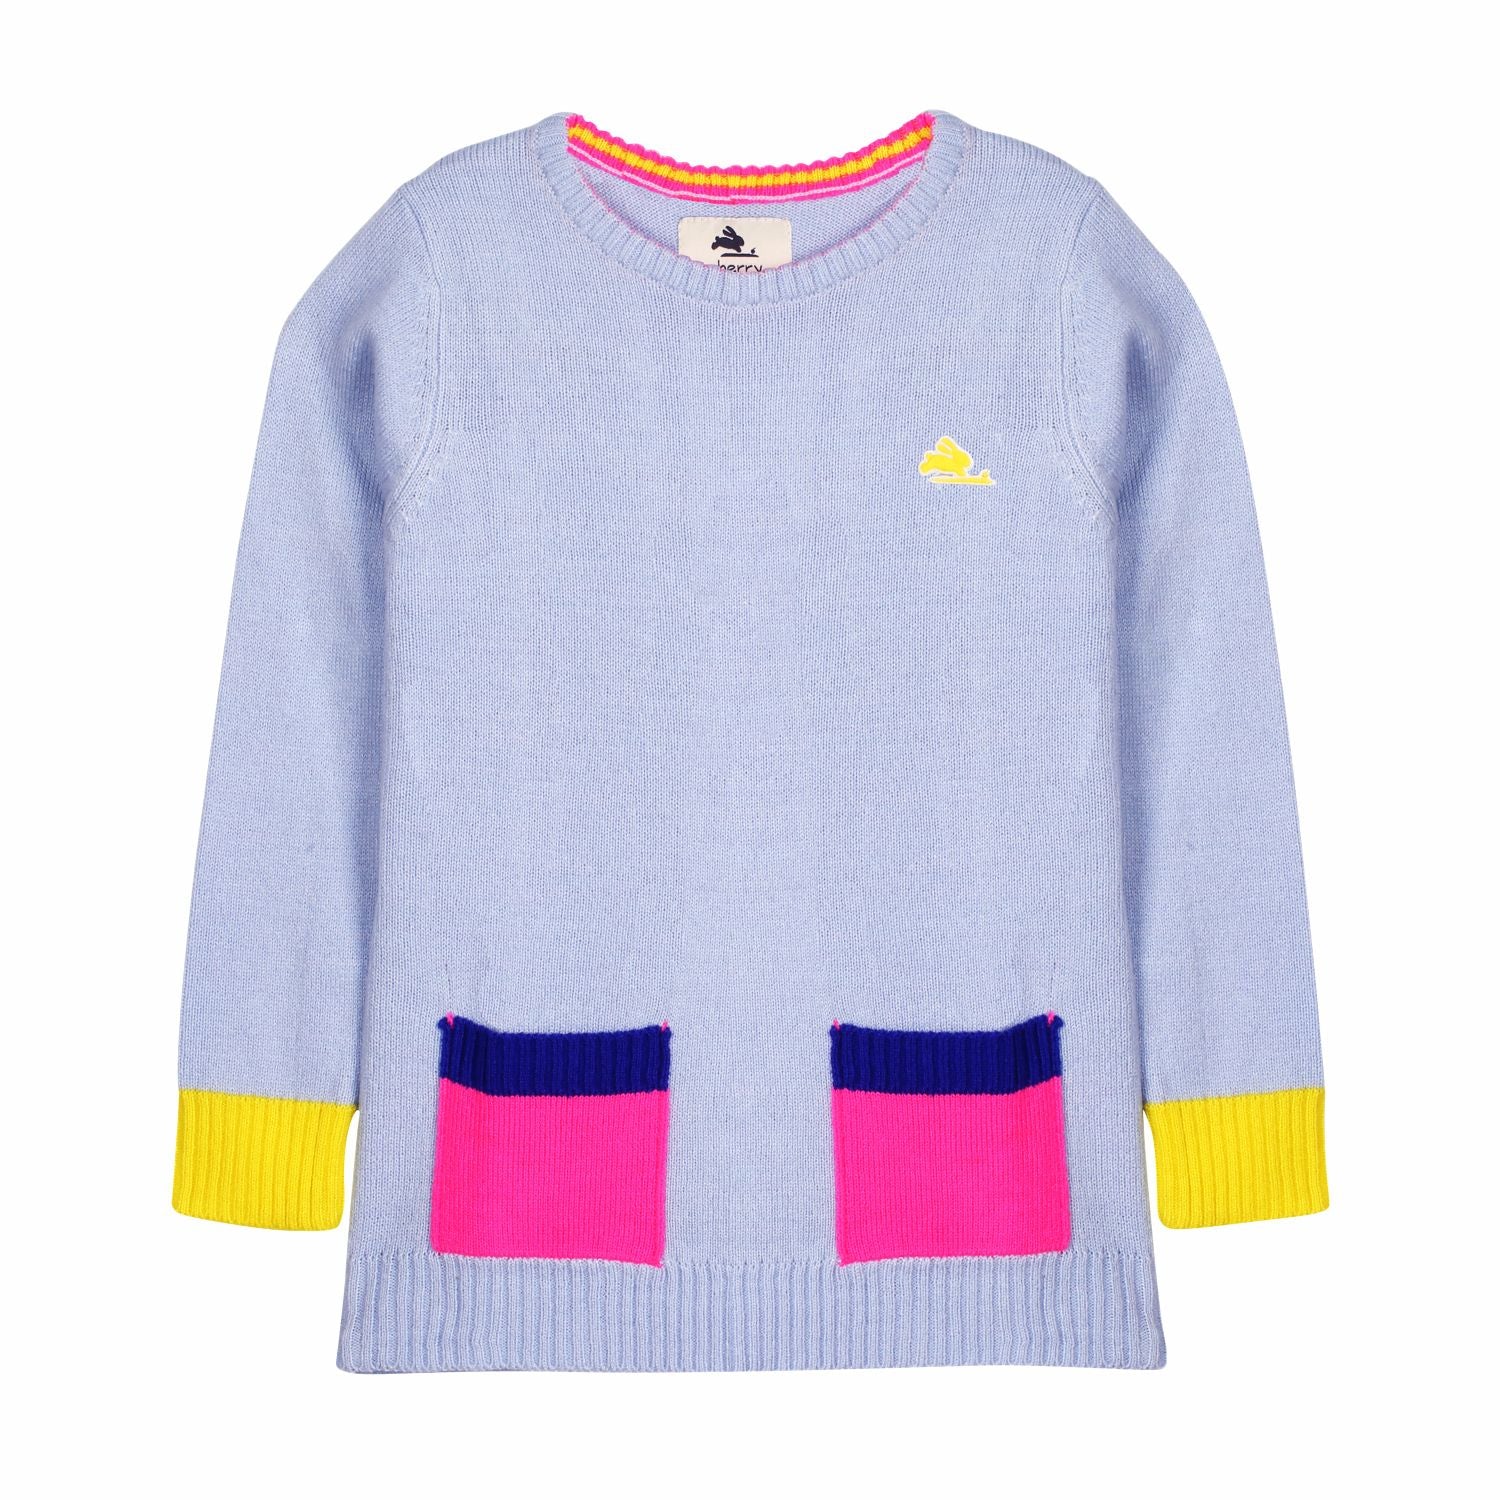 Colorblock Pocket Knitted Jumper for Girls